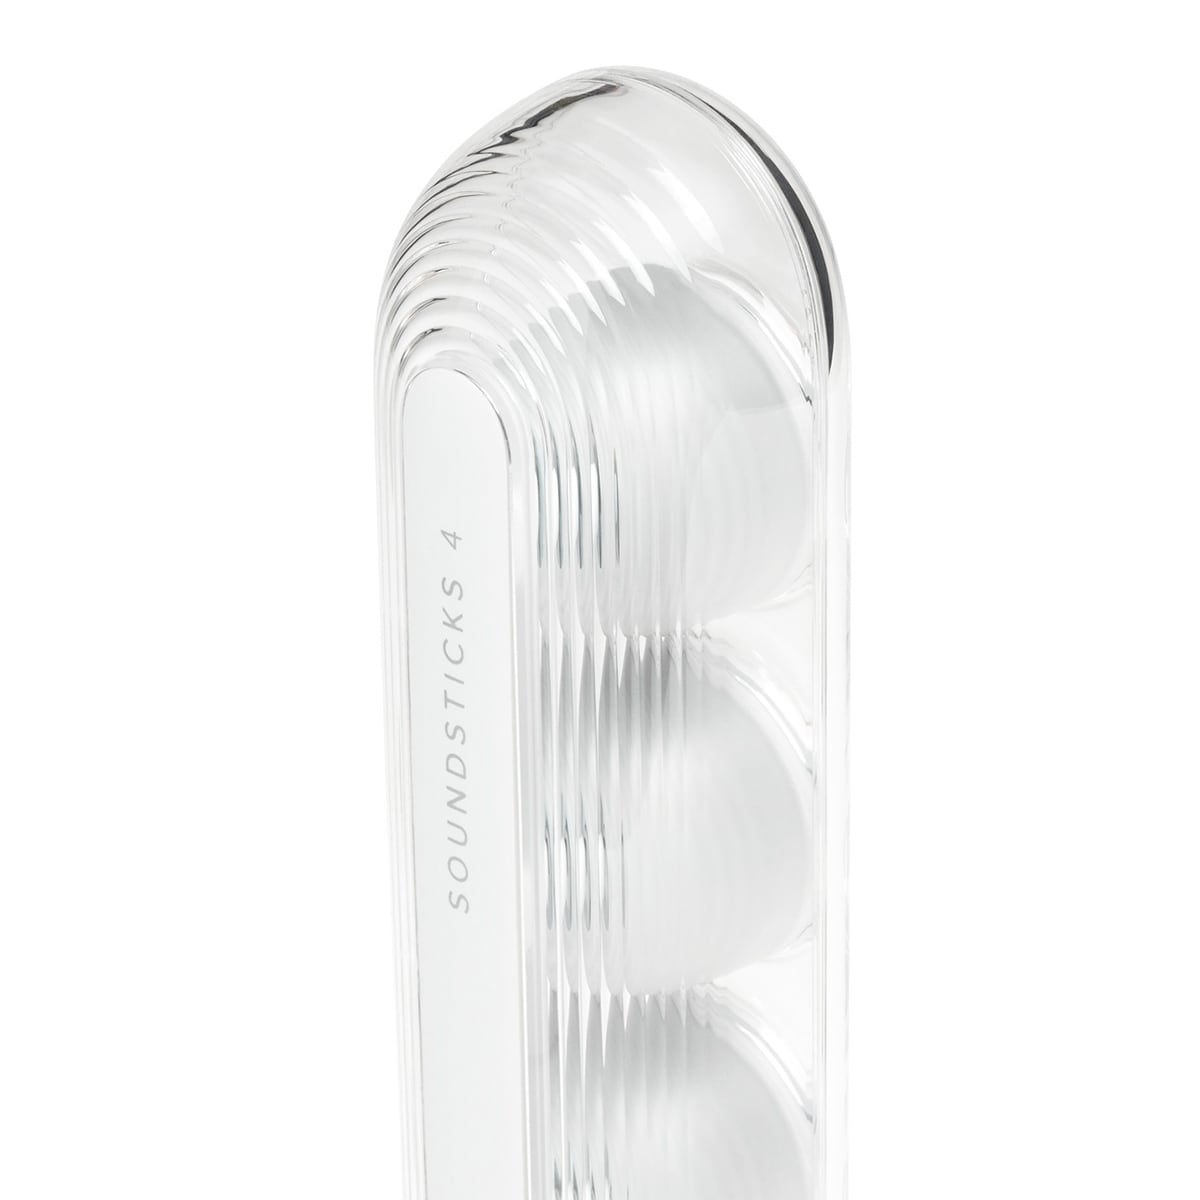 Harman Kardon SoundSticks IV Bluetooth Speaker System (White)